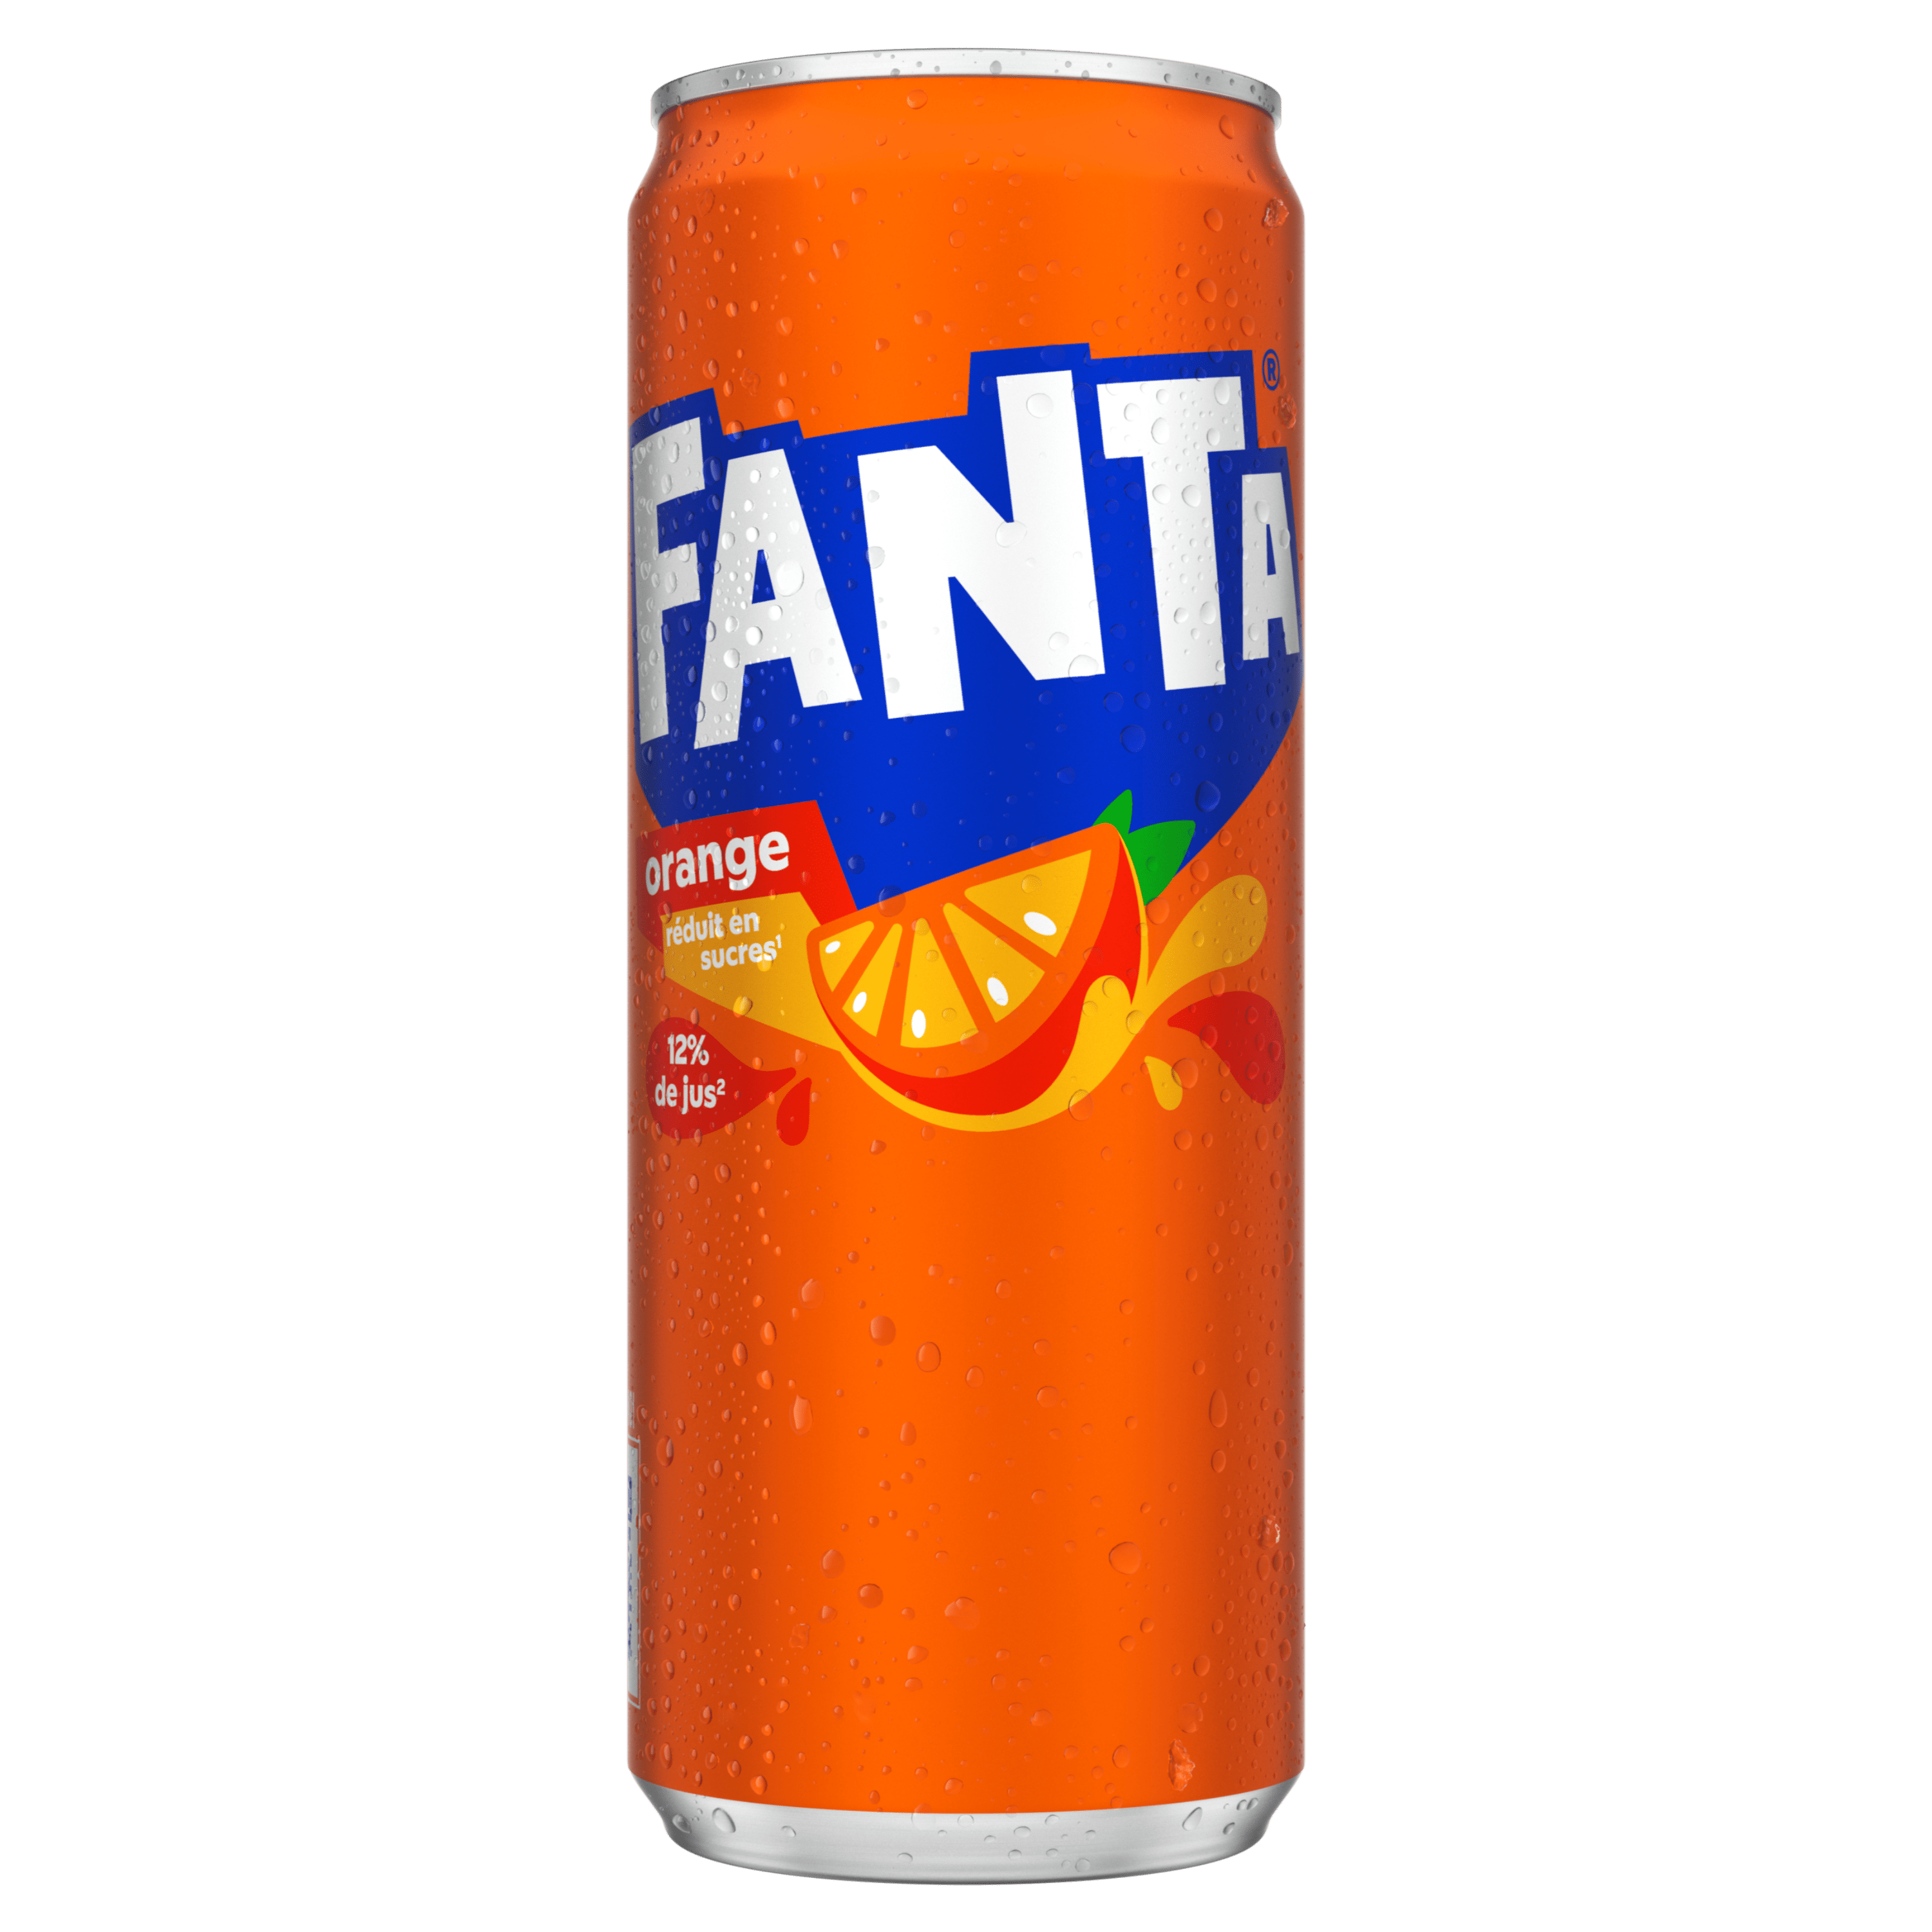 Bouteille de Fanta orange